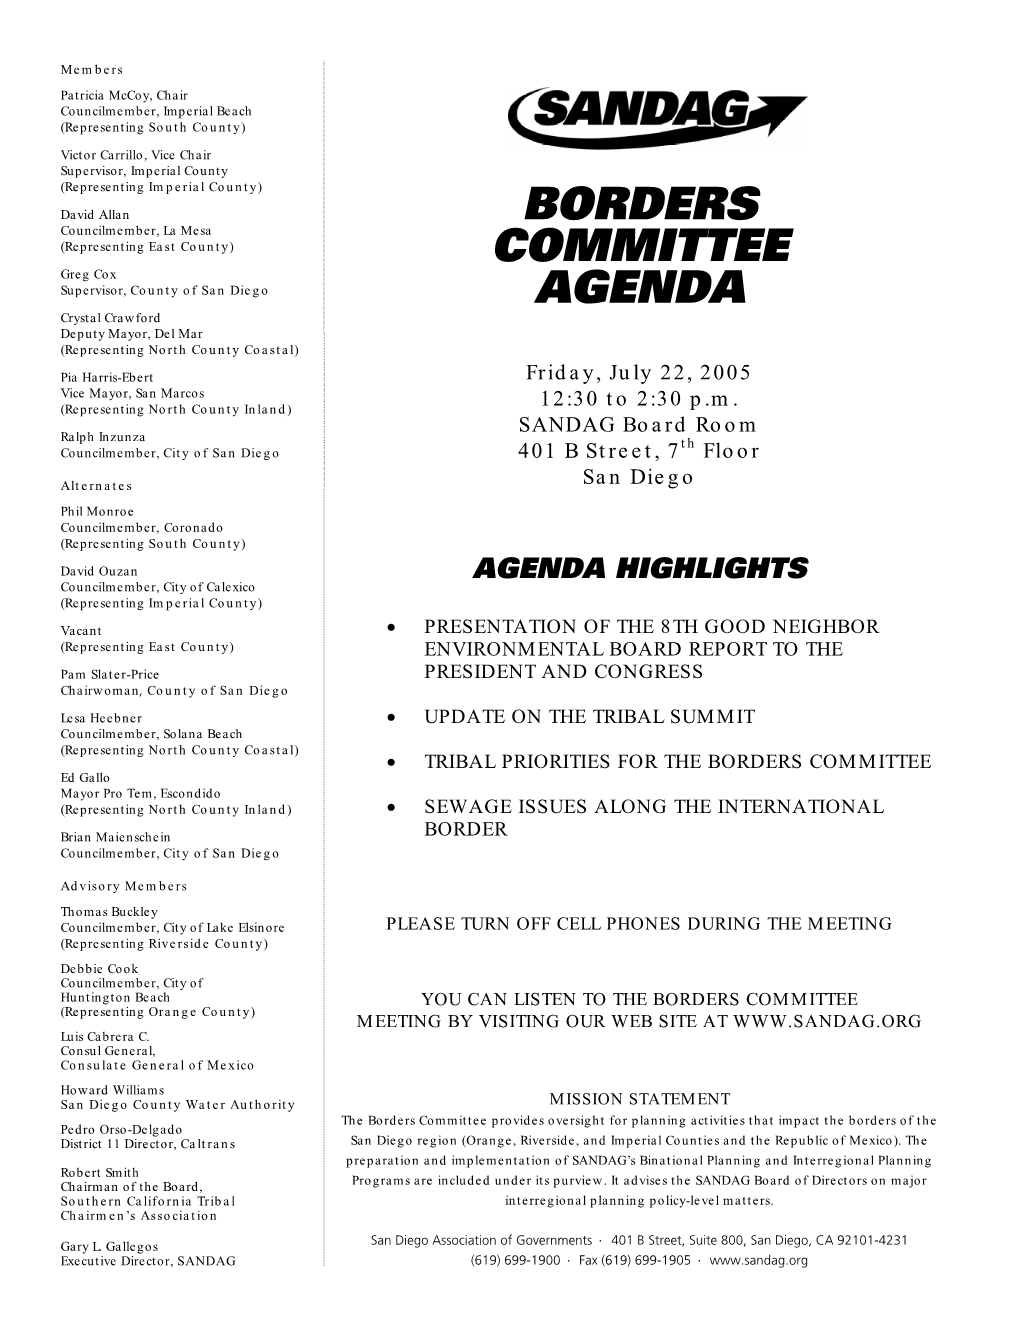 Borders Committee Agenda